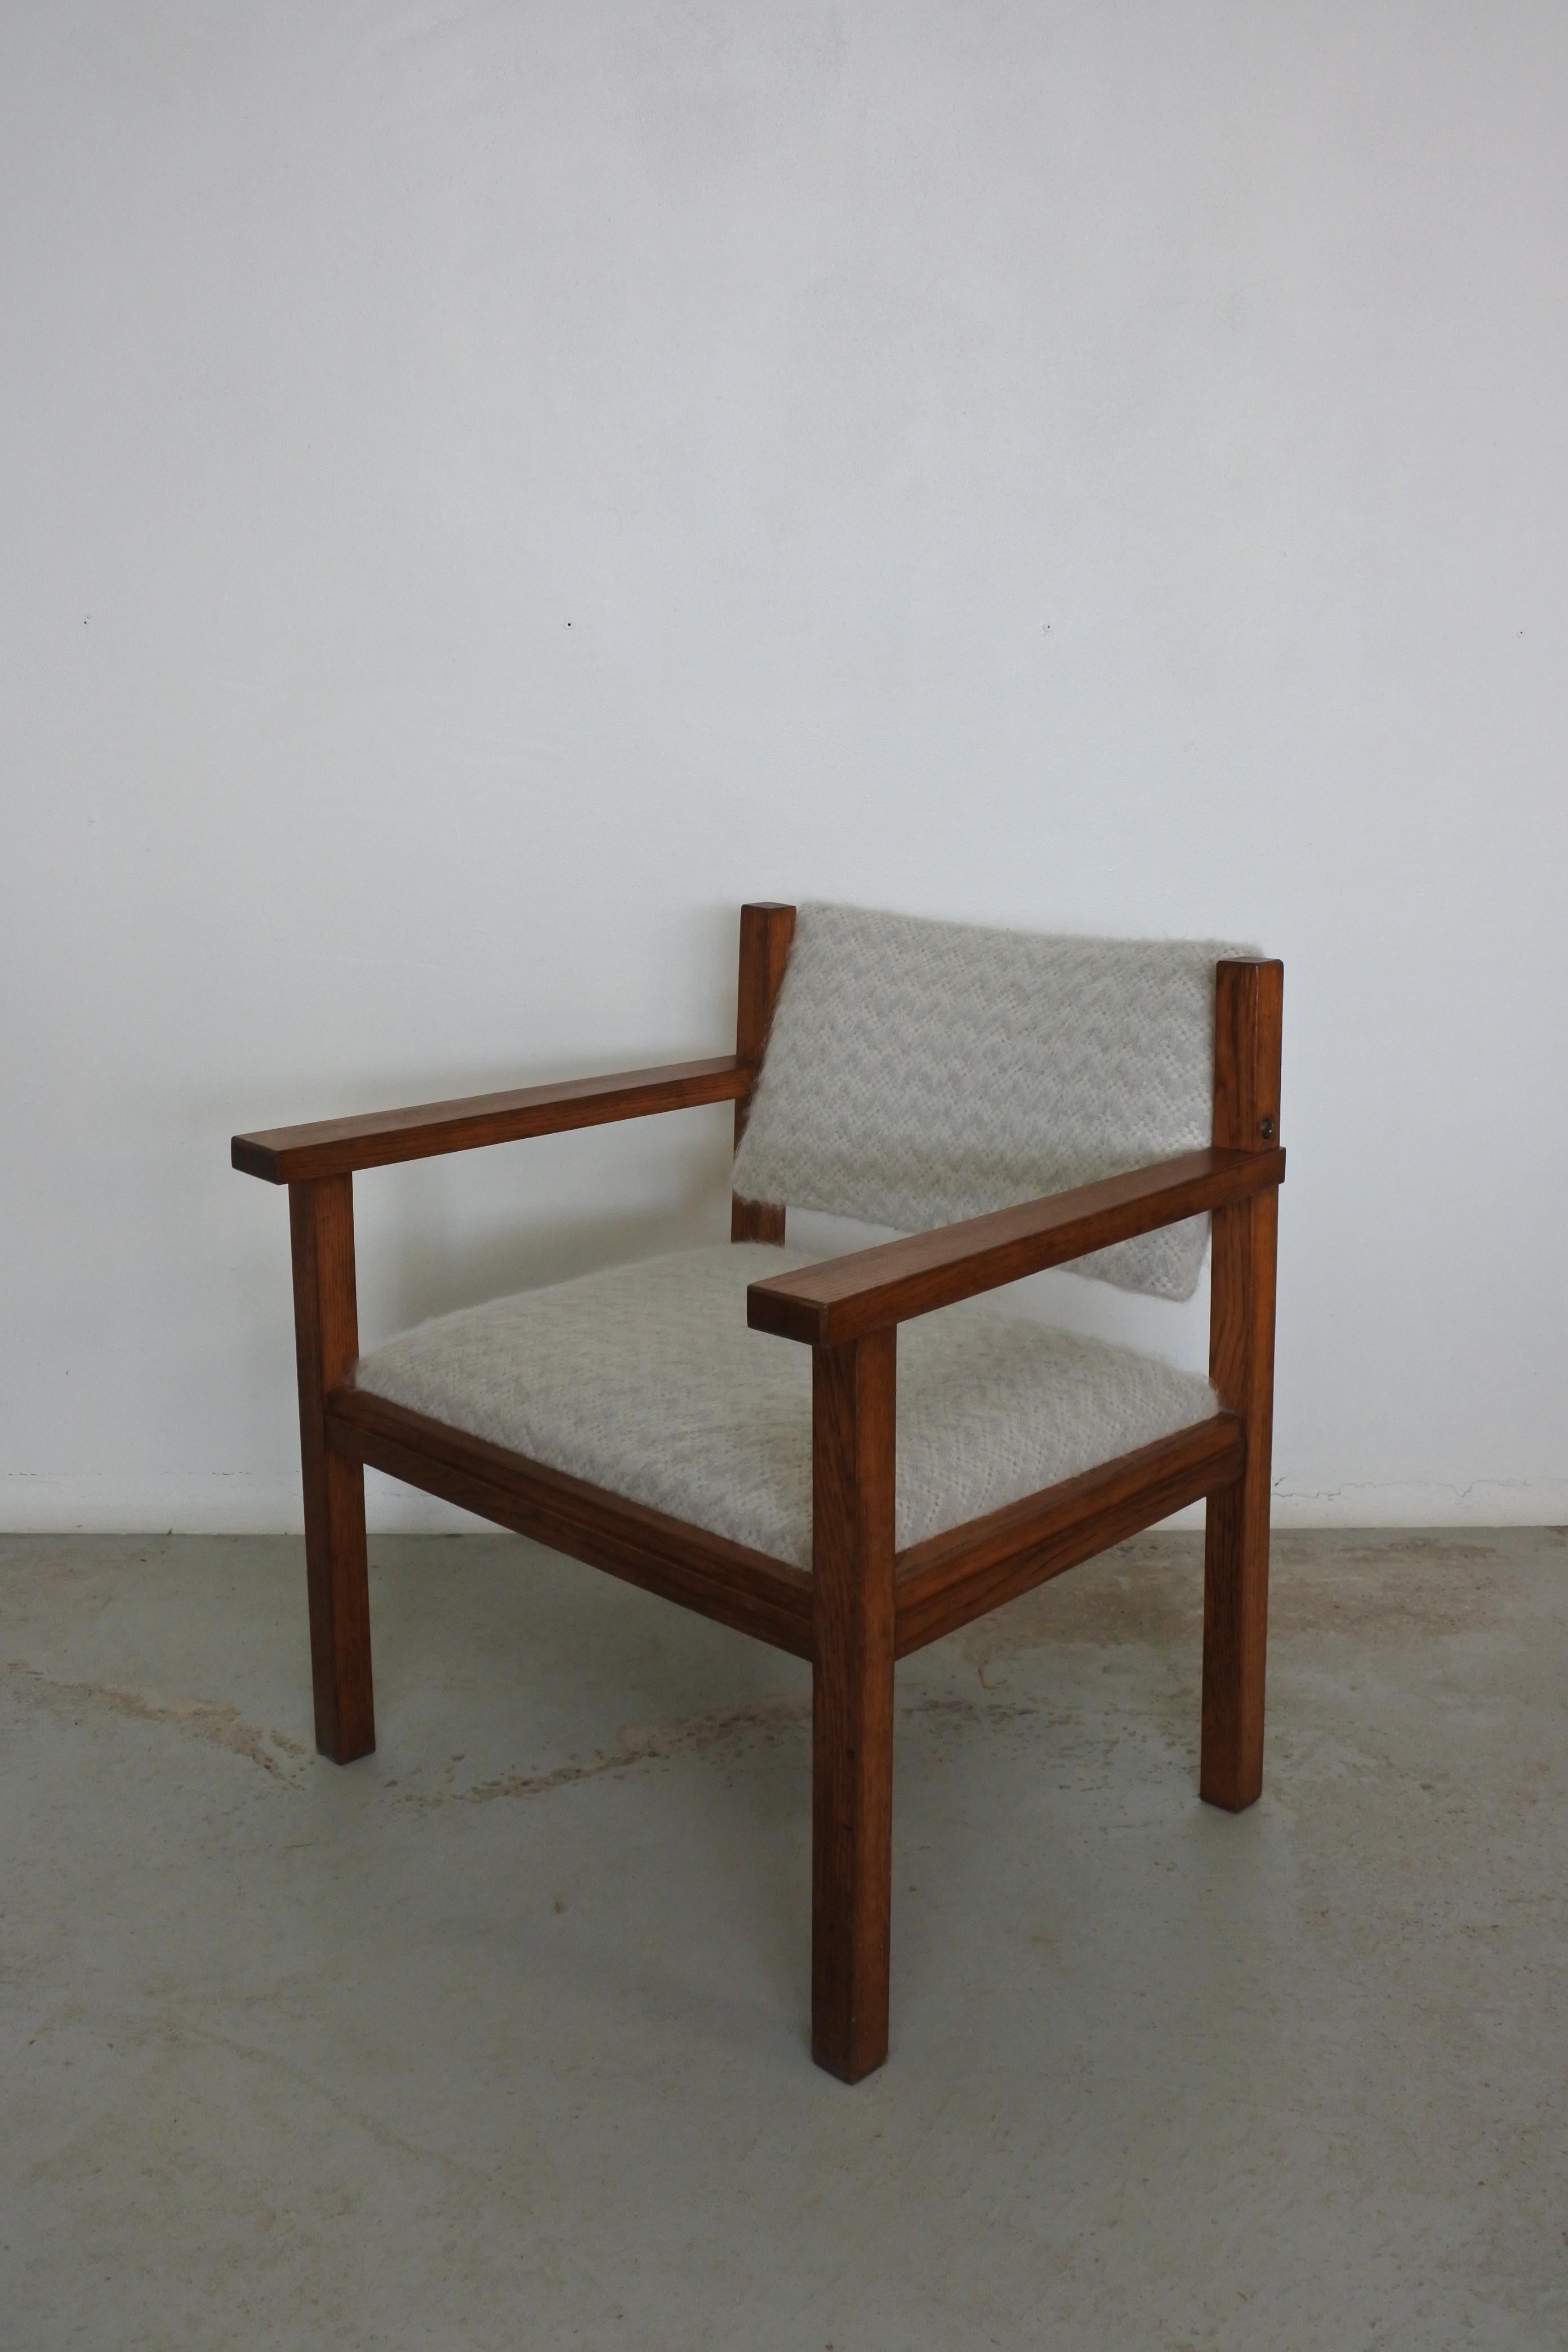 Modernist Armchair in Oak Wood, France, 1940s For Sale 8